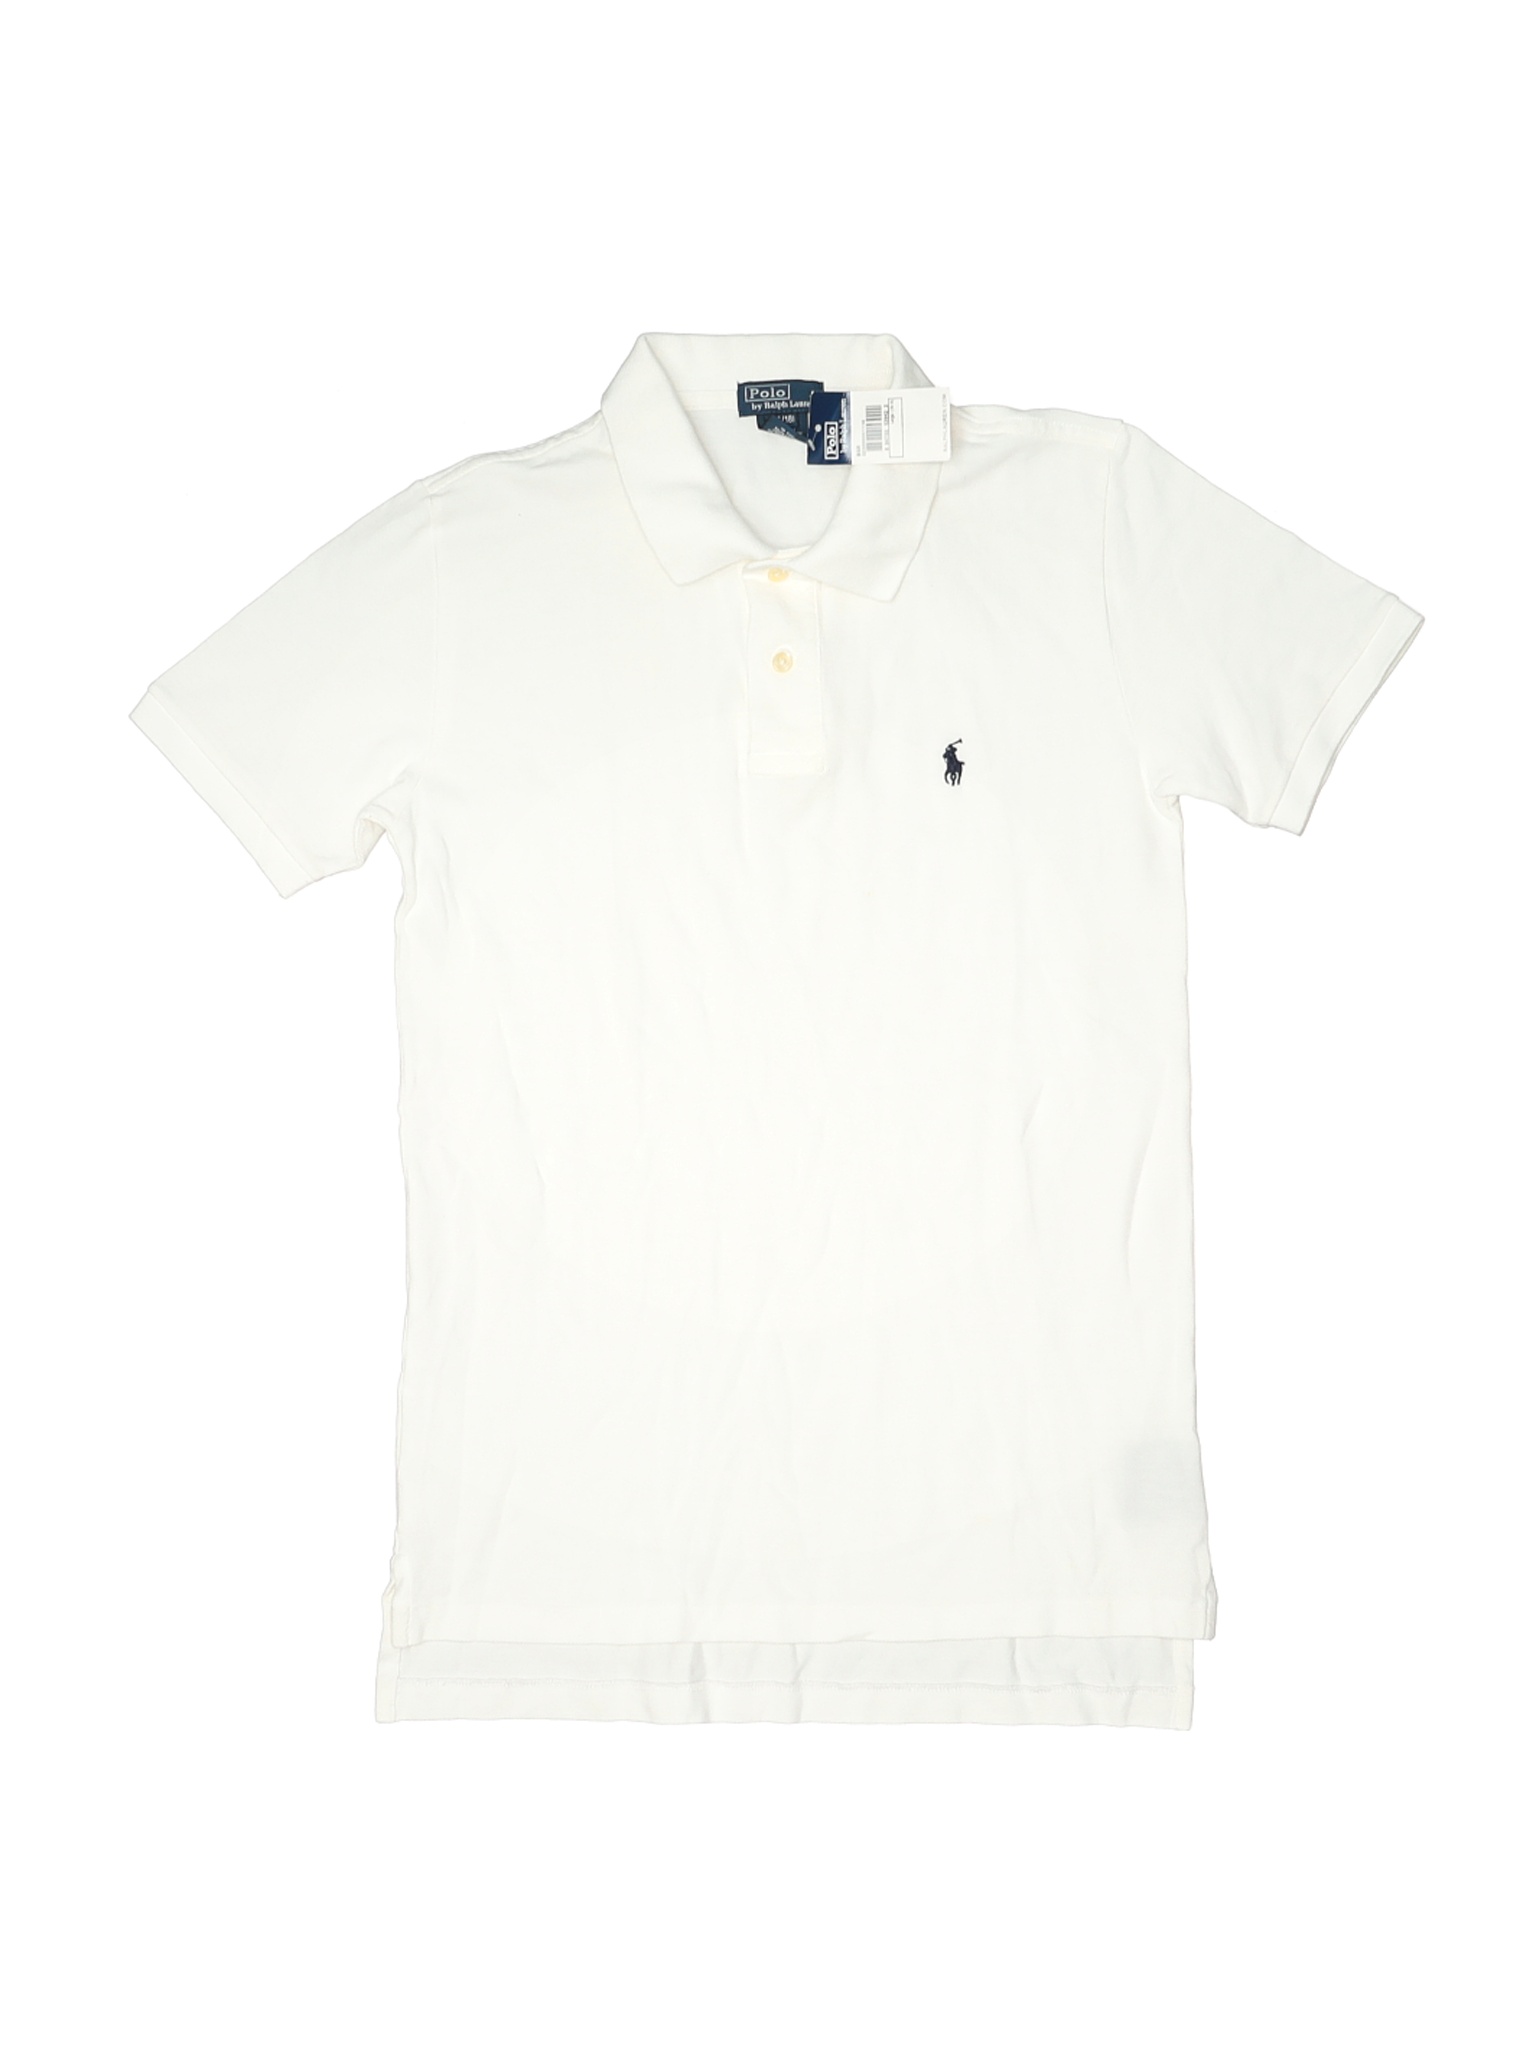 NWT Polo by Ralph Lauren Boys White Short Sleeve Polo 16 | eBay